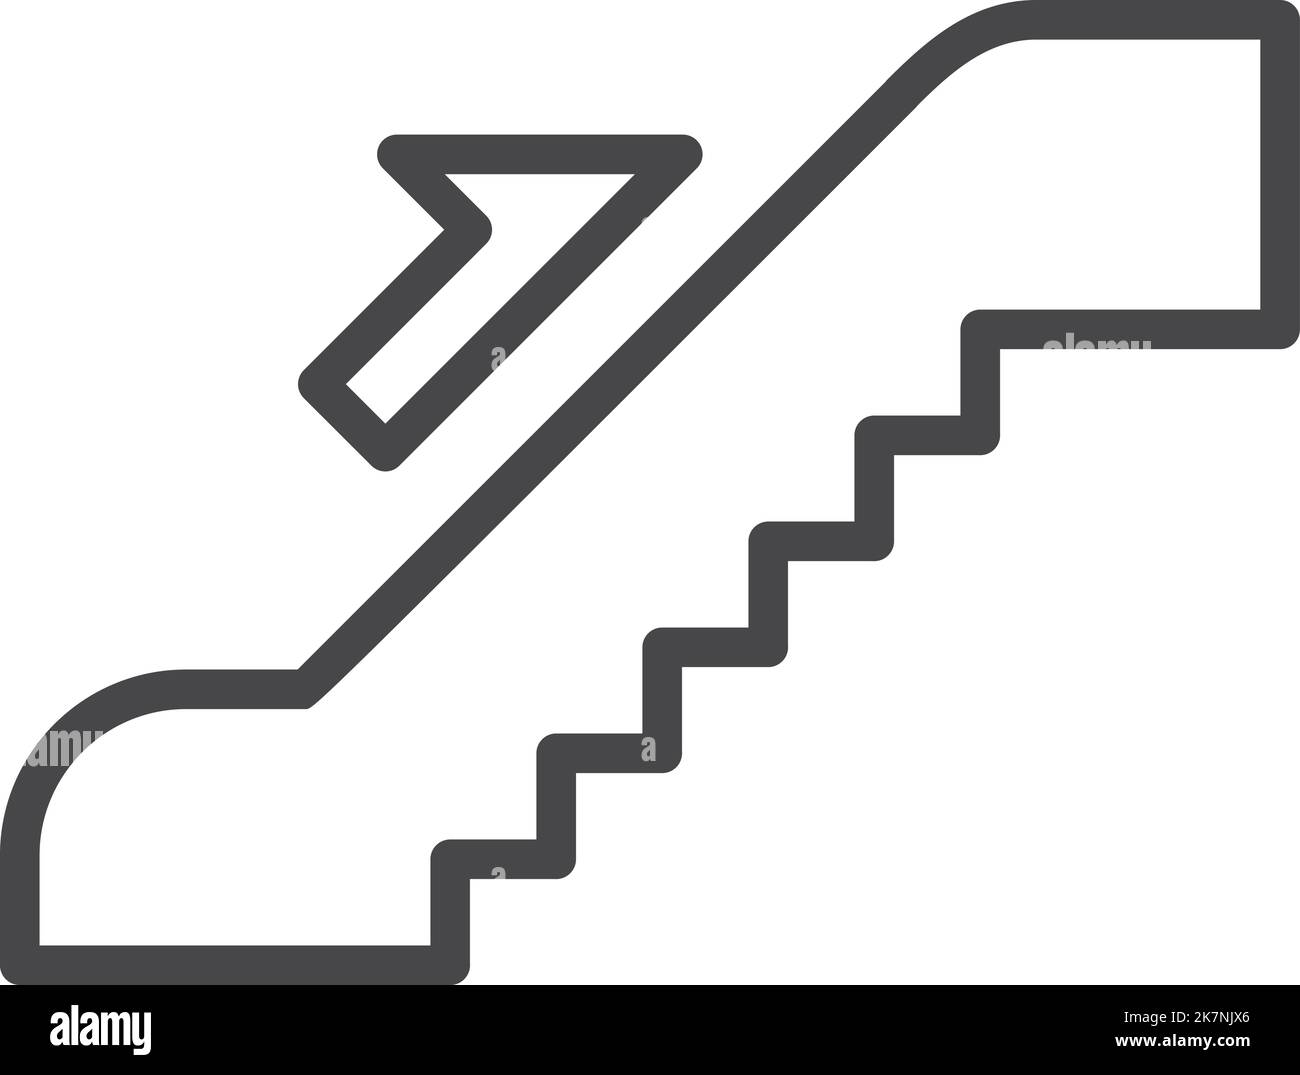 Upward staircase icon. Moving escalator lift symbol Stock Vector